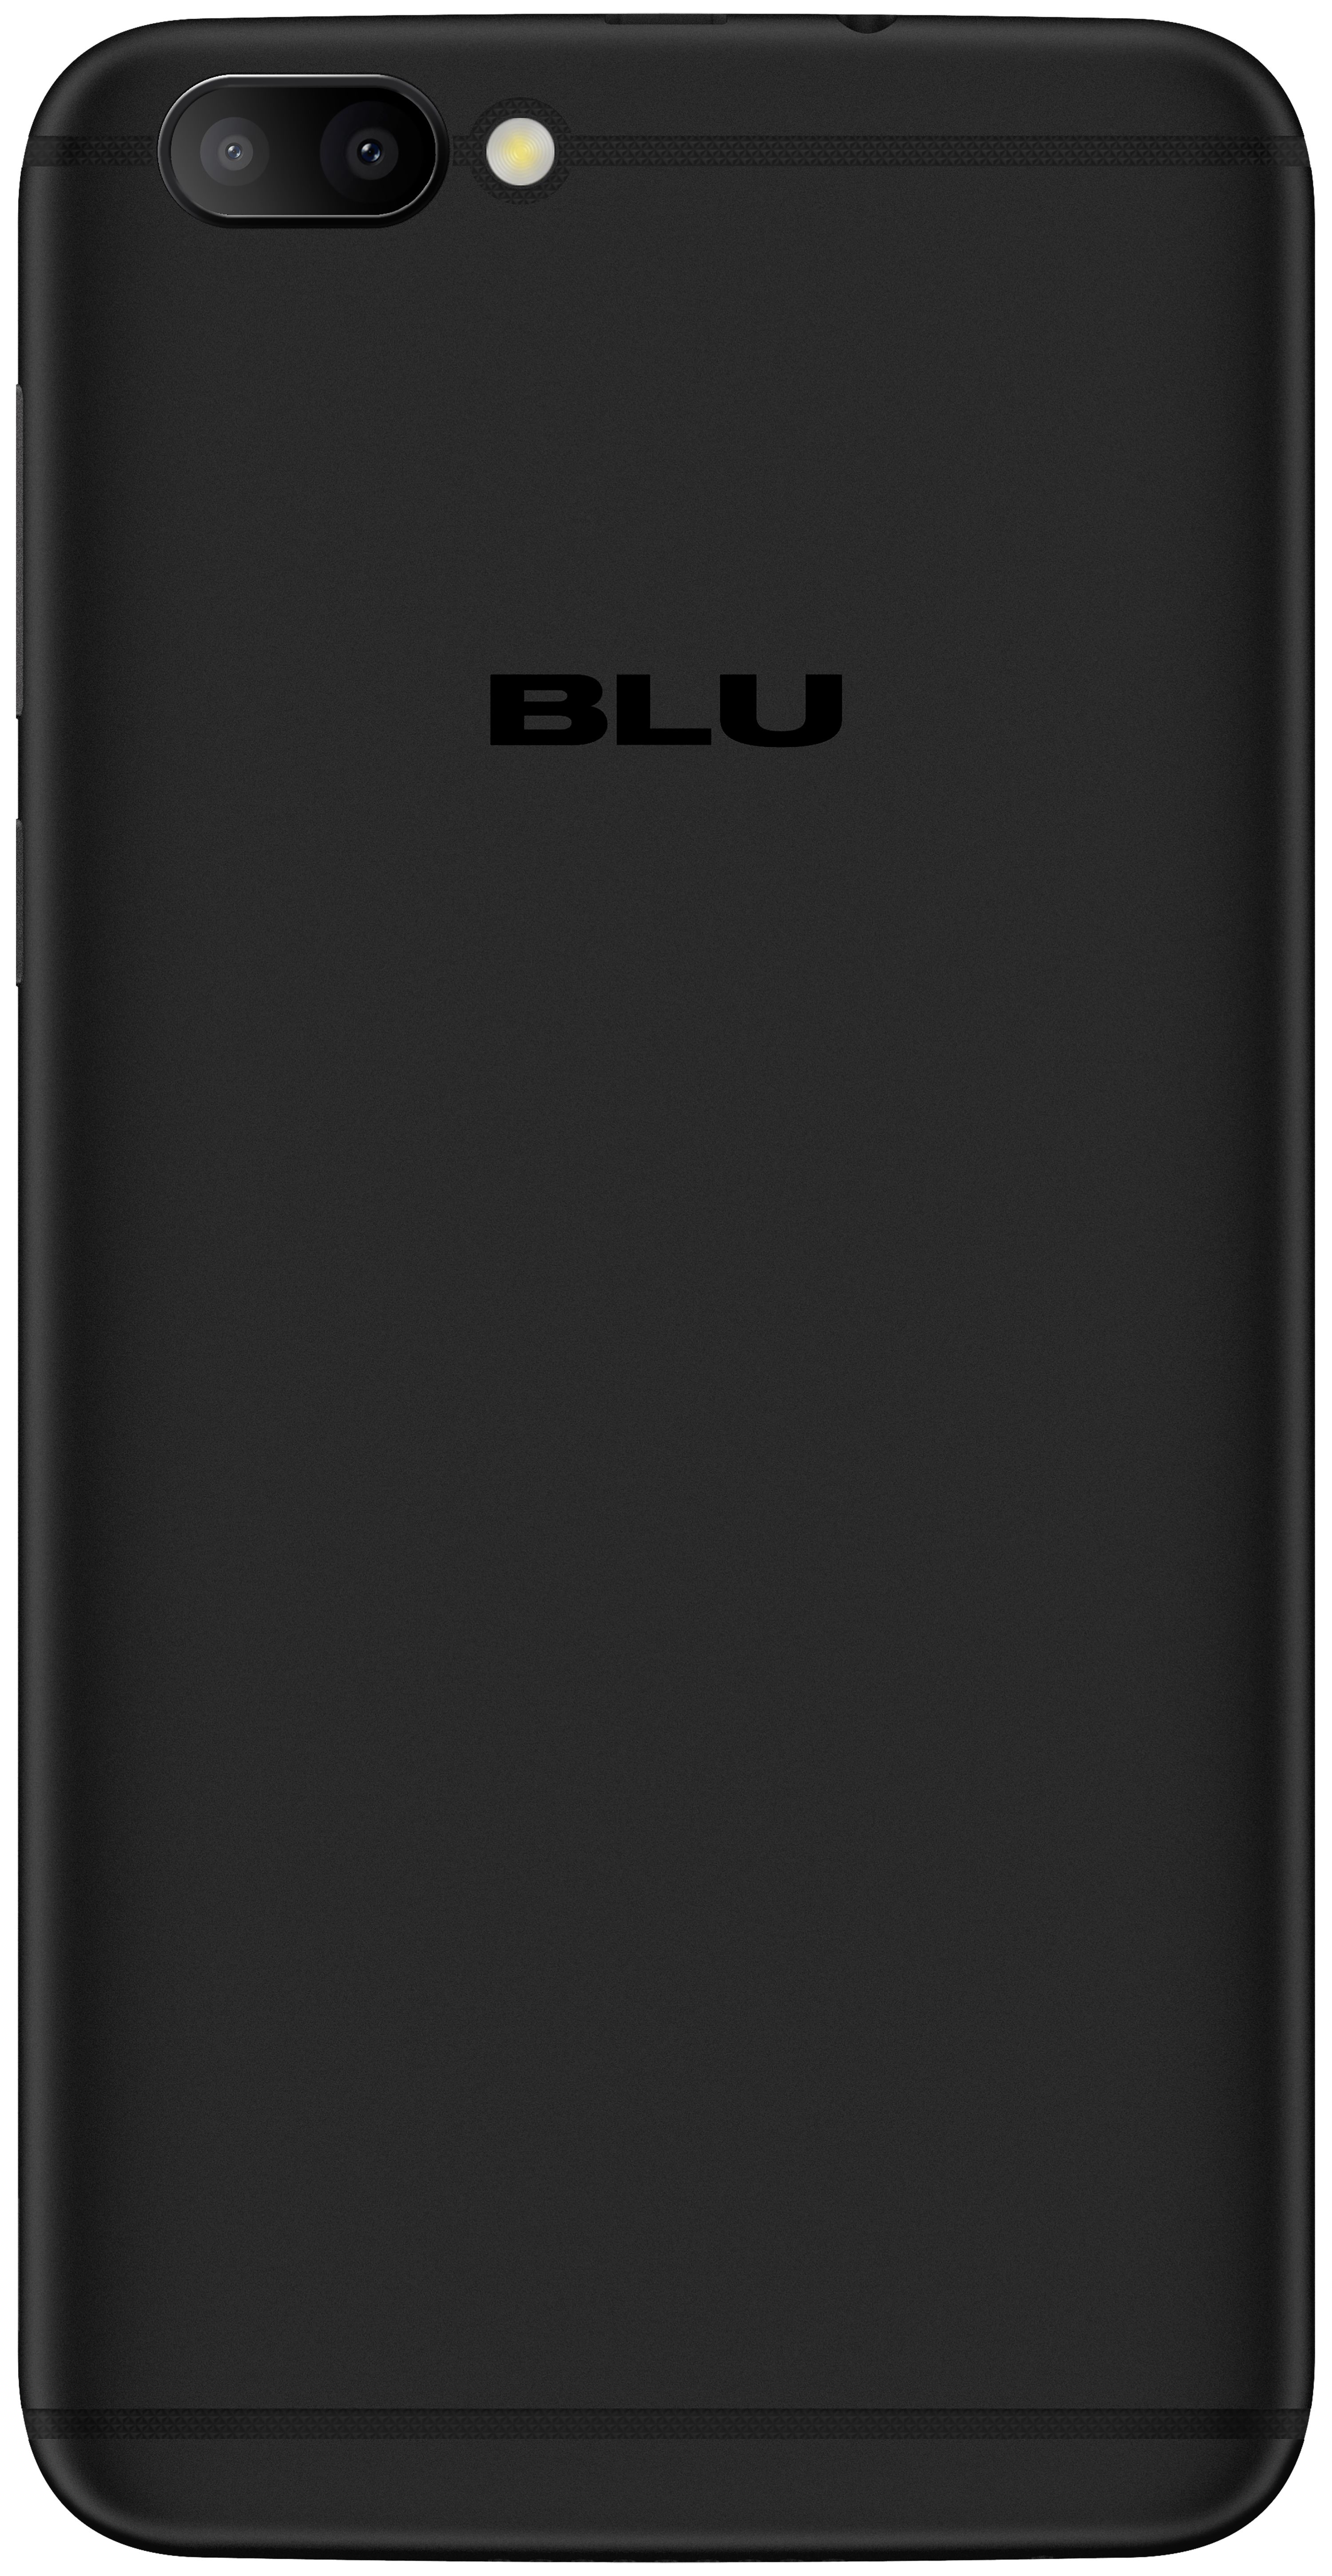 BLU C6 C031P Unlocked GSM Dual-SIM Android Phone w/ Dual 8MP|2MP Camera - Black - image 2 of 4